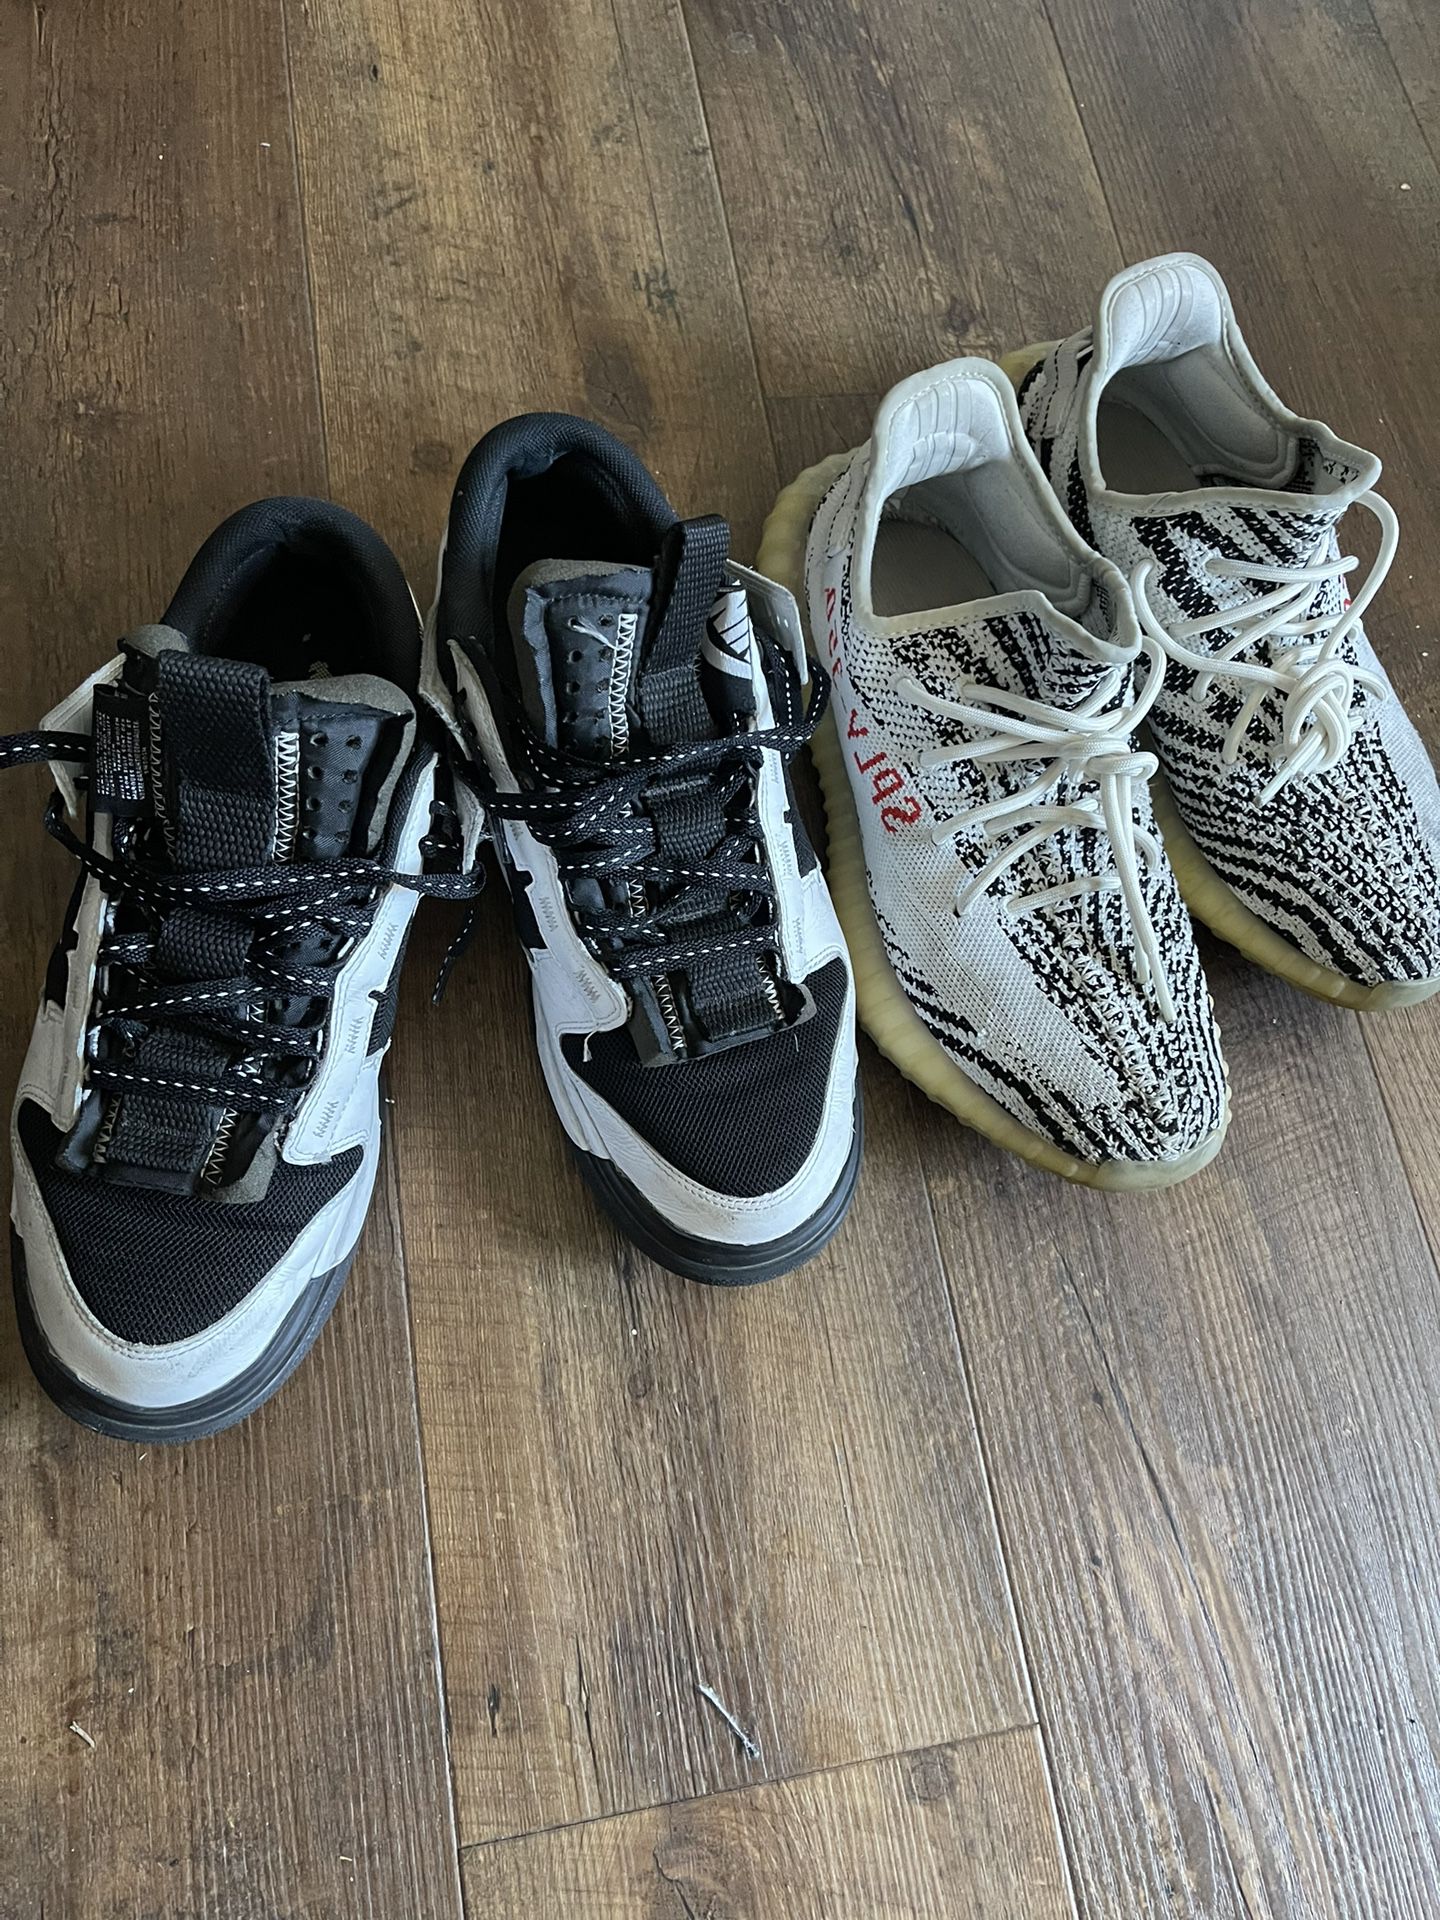 Yeezy Zebra / Nike Pandas